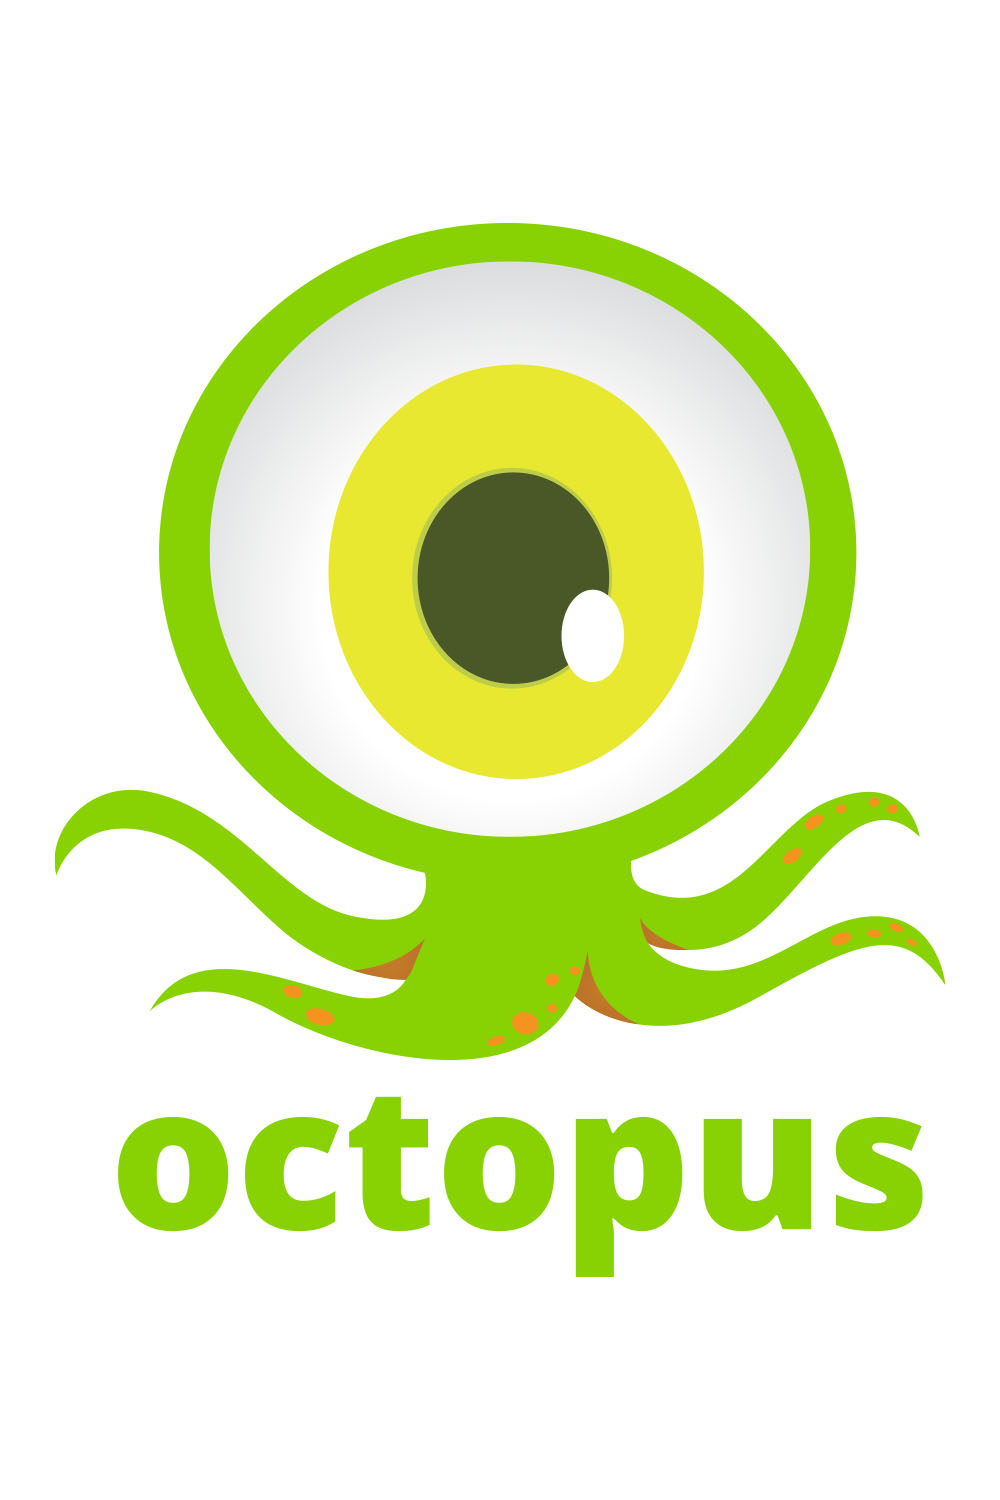 Octopus logo design pinterest preview image.